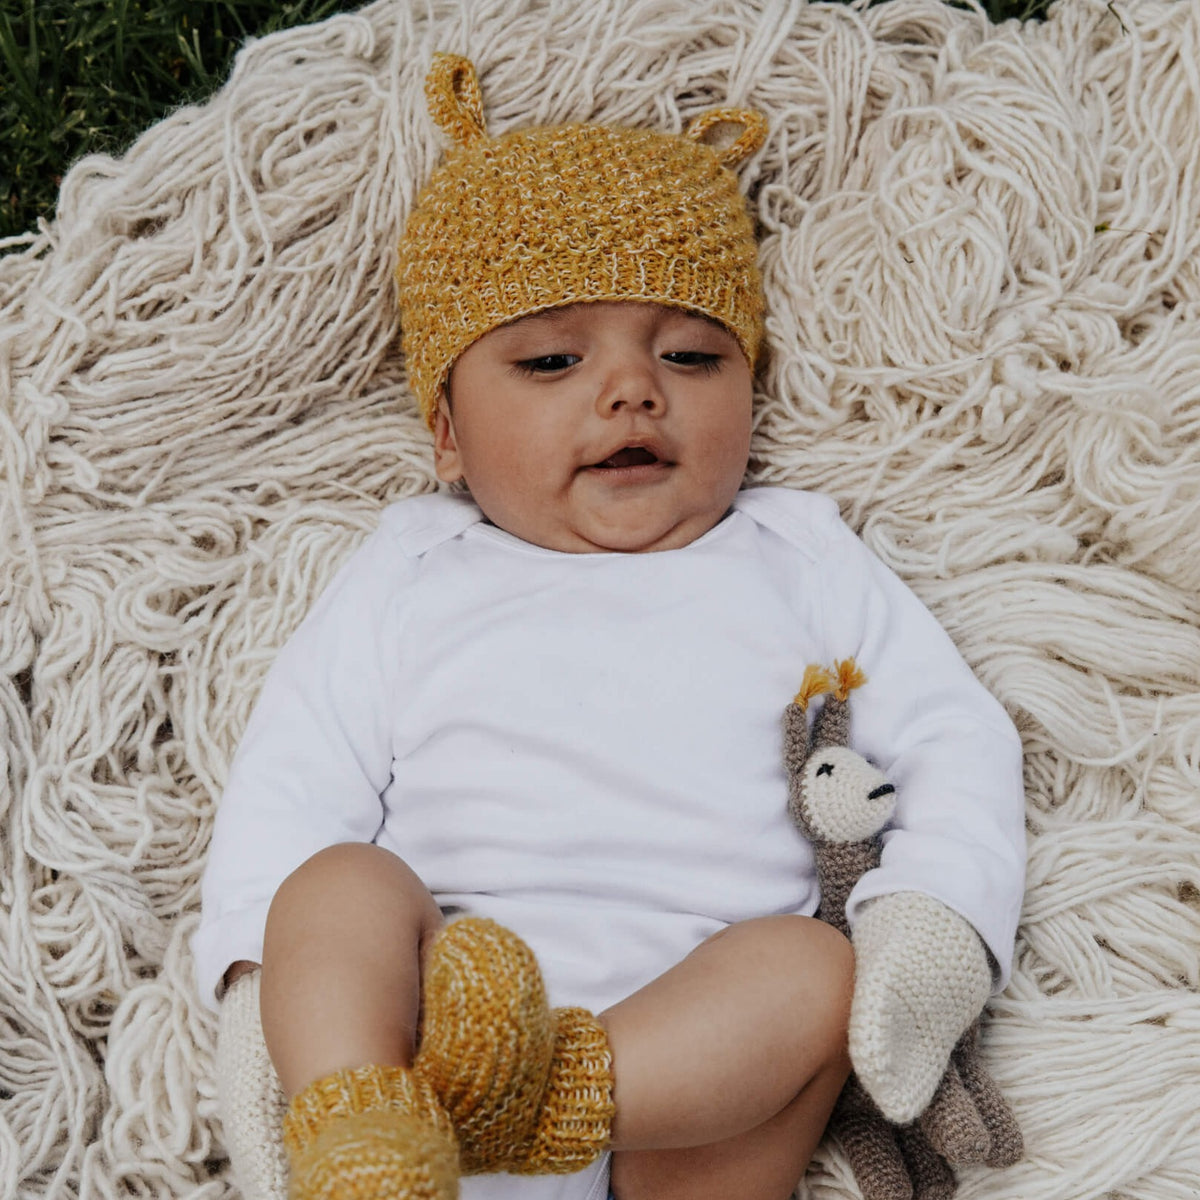 Gray Baby Alpaca Yarn From Peru for Crocheting or Knitting